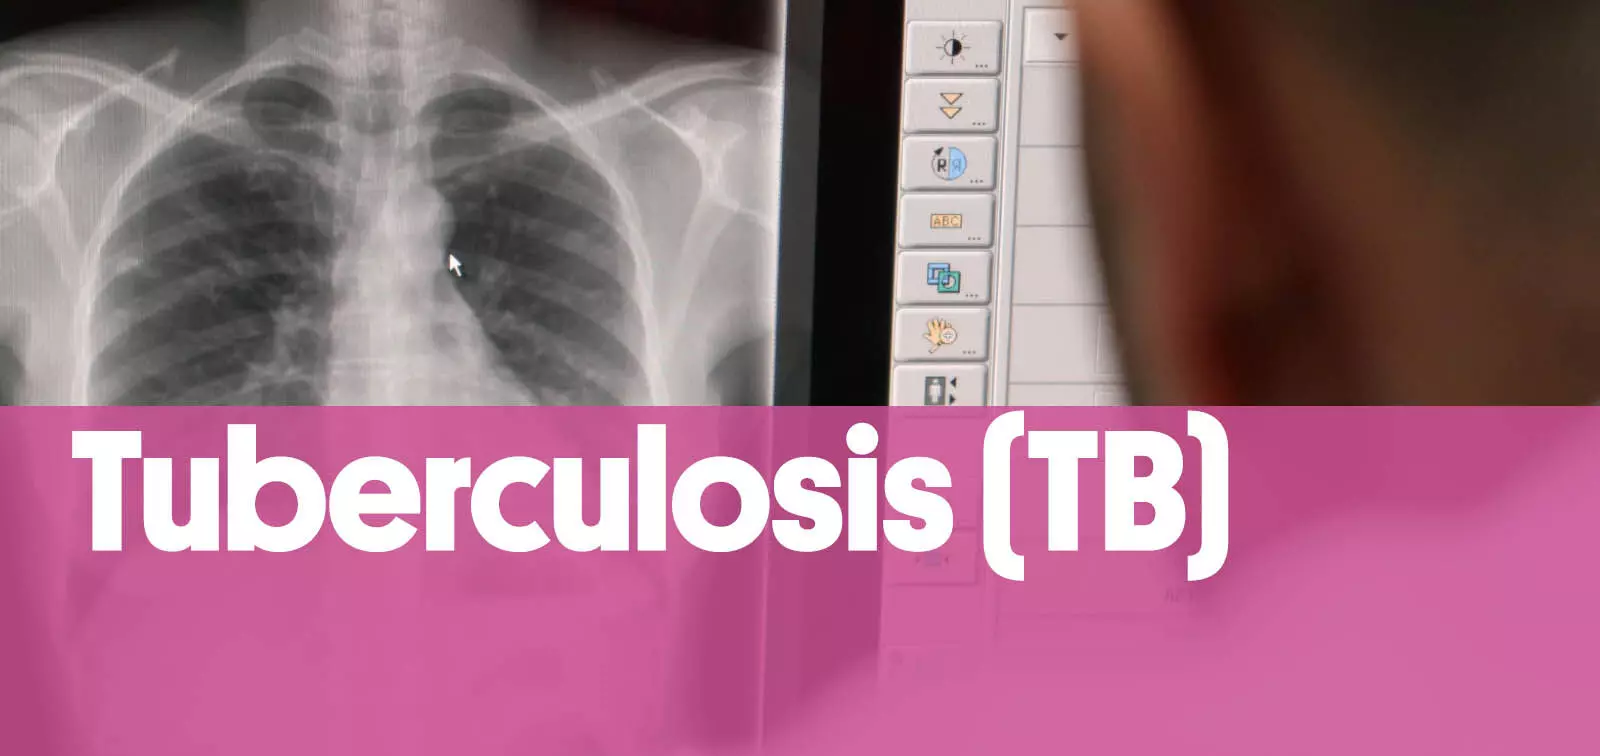 Tuberculosis: CSO Seeks More Sensitisation, Media Partnership to Tackle Spread